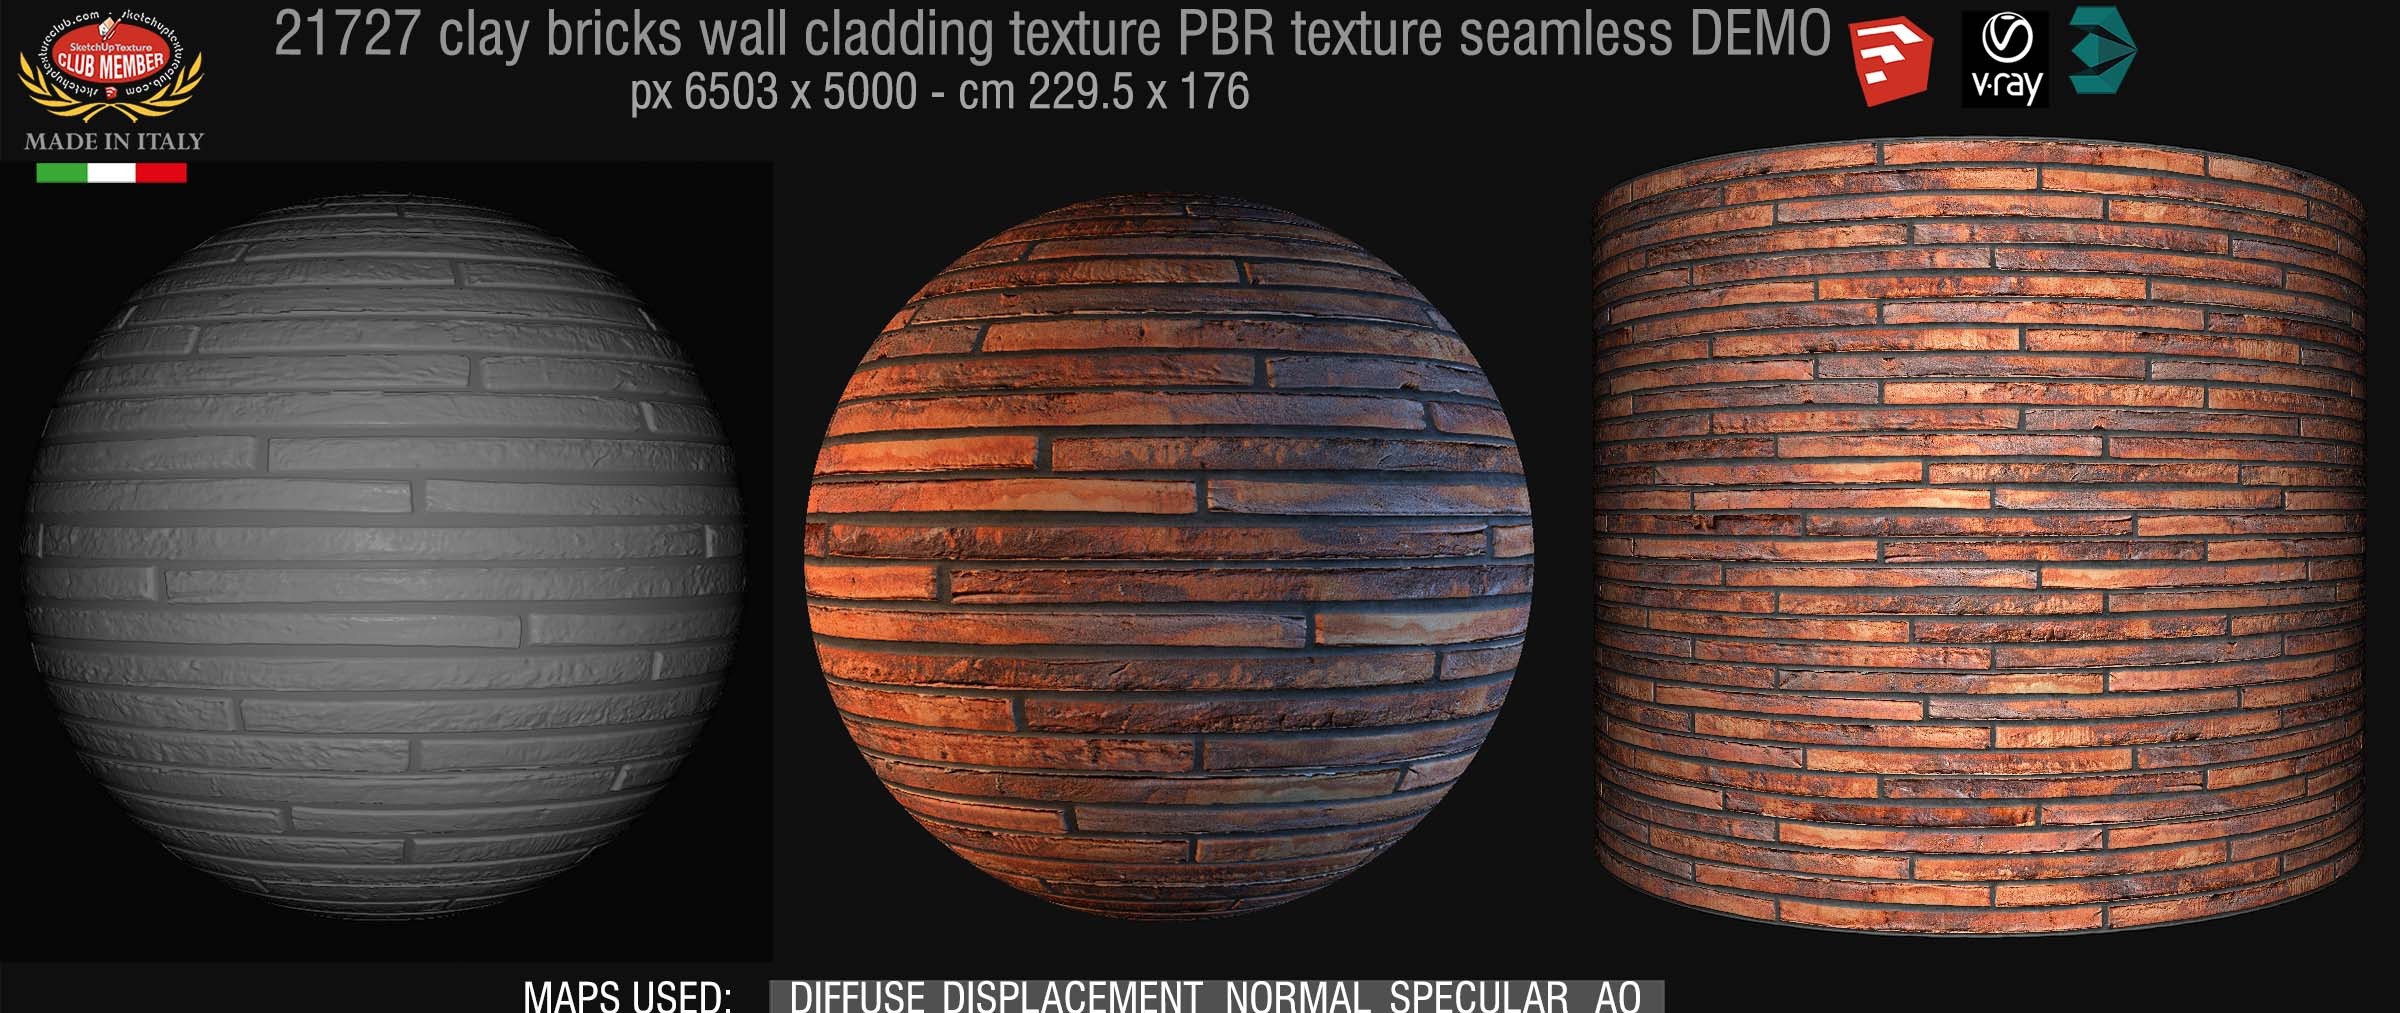 21727 Clay bricks wall cladding PBR texture seamless DEMO